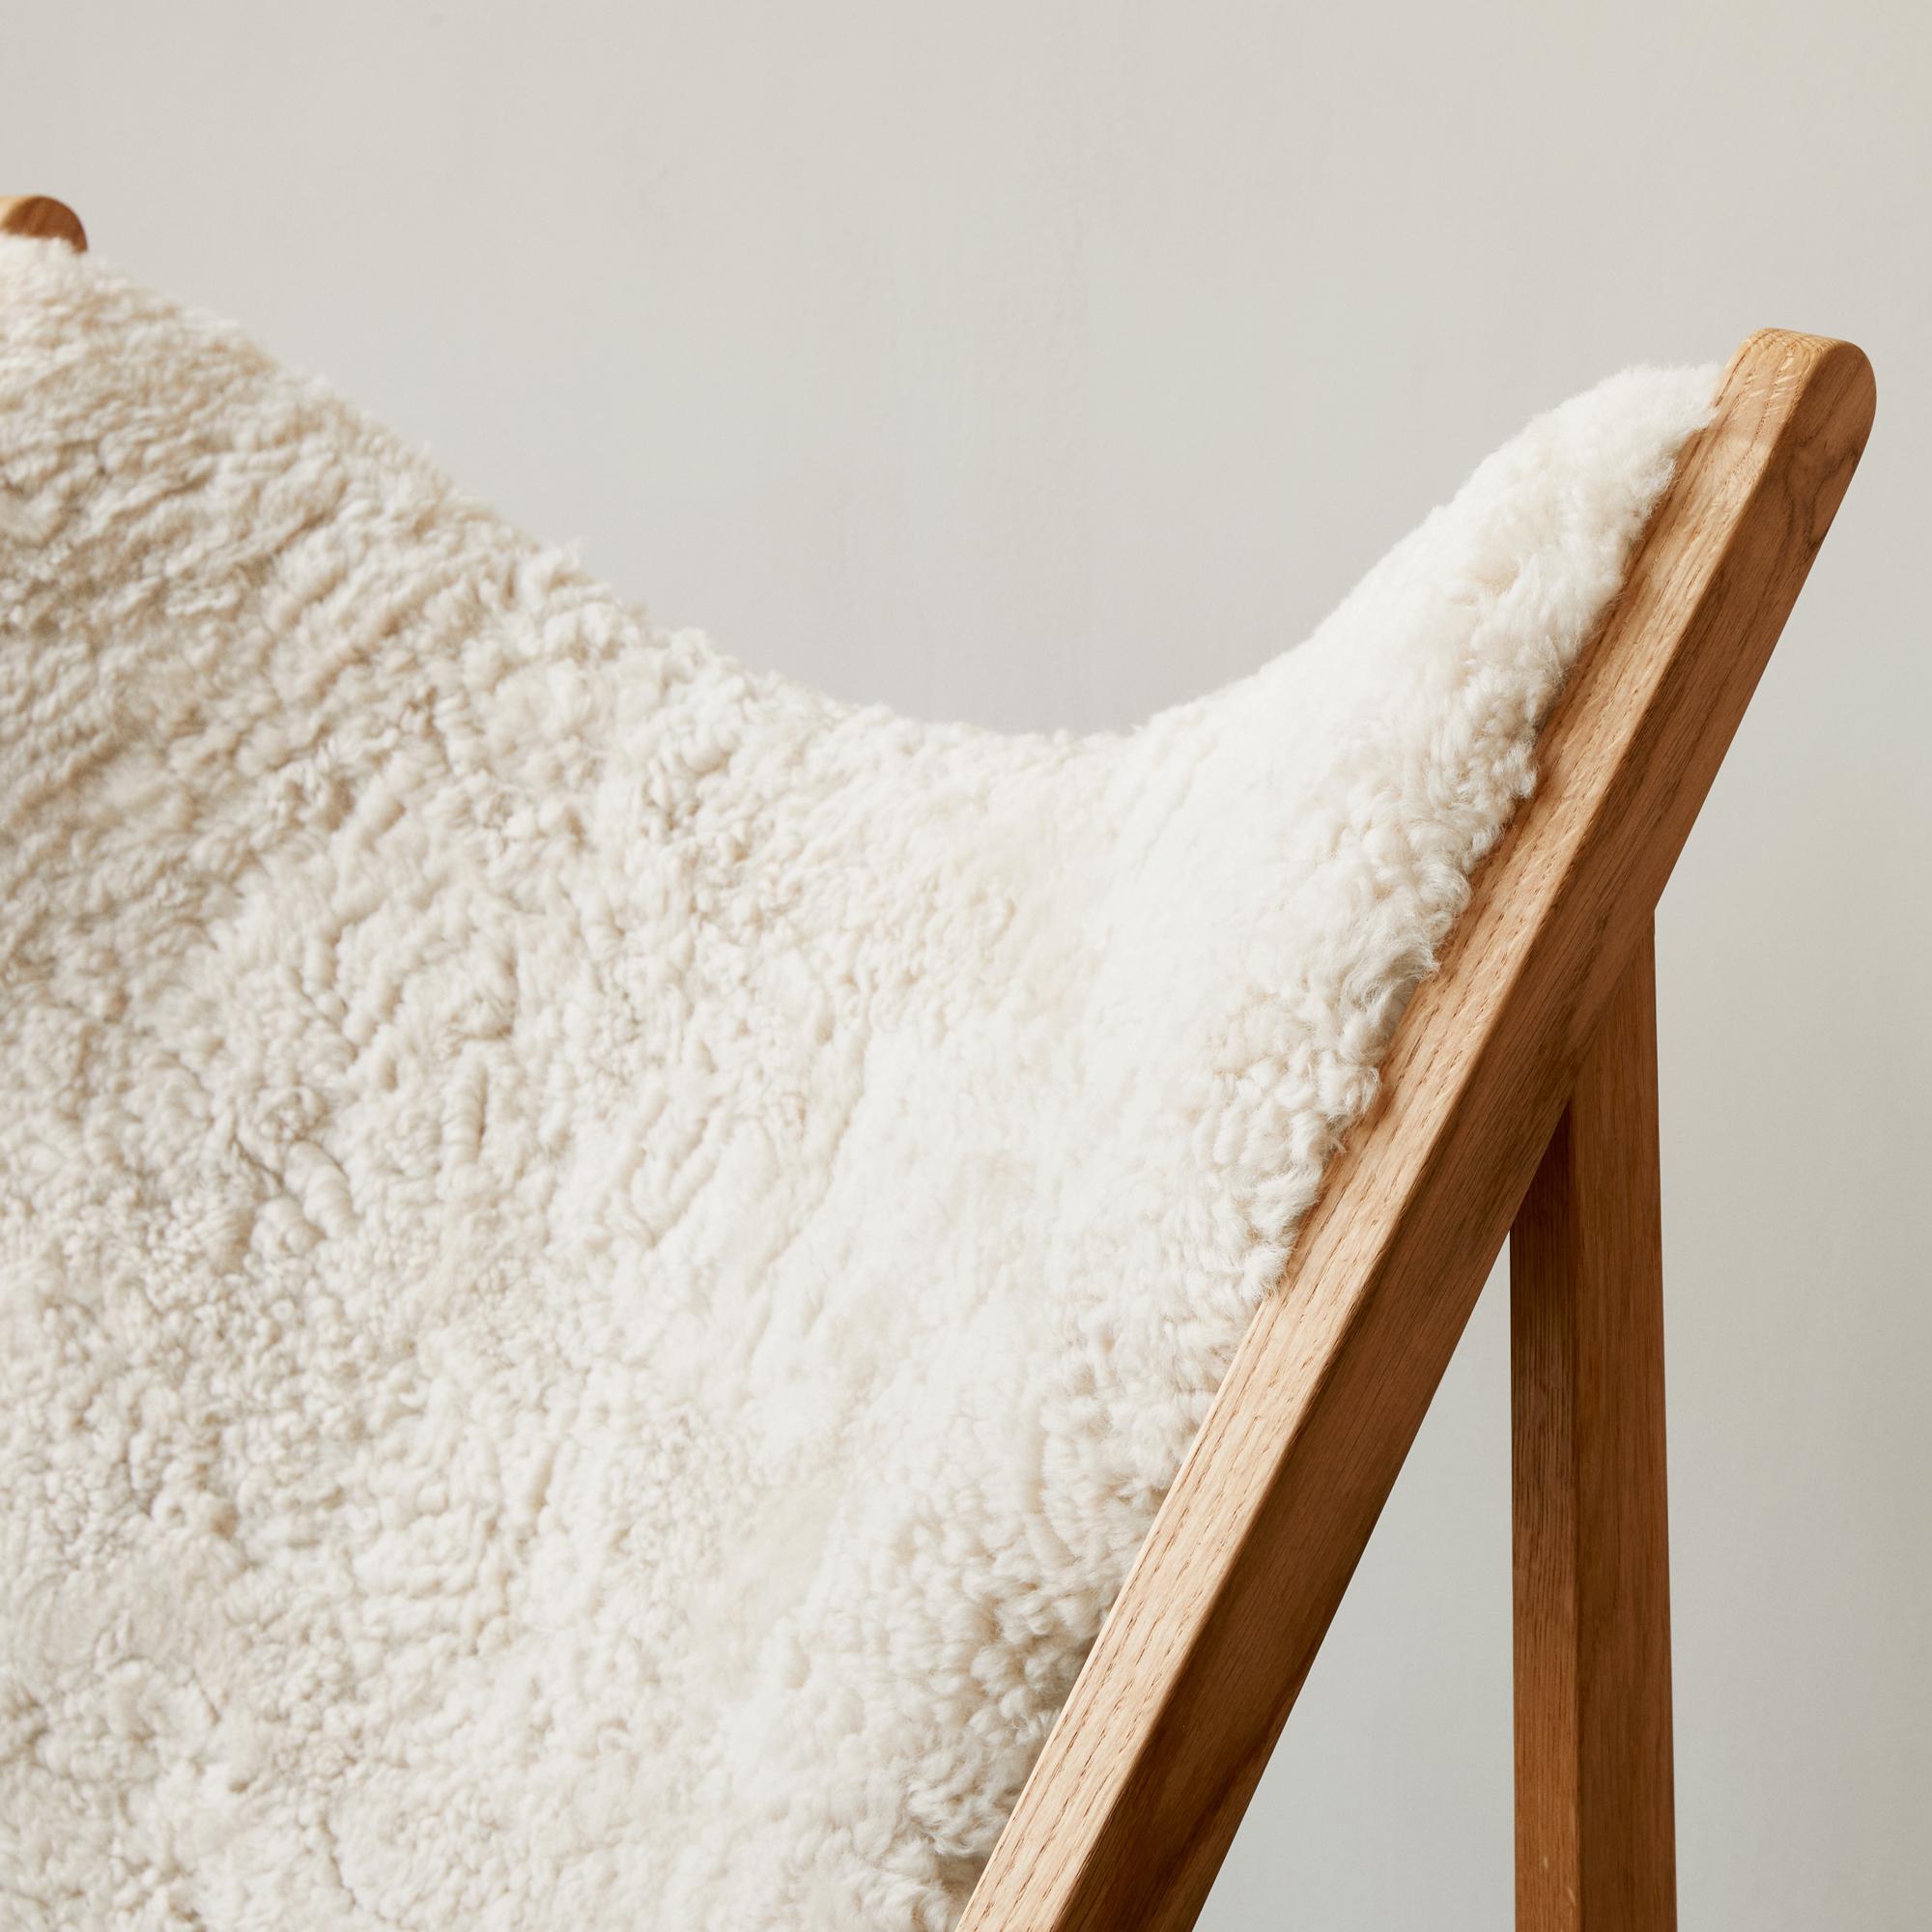 Ib Kofod-Larsen Knitting Lounge Chair, Natural Oak with Sheepskin, White For Sale 3